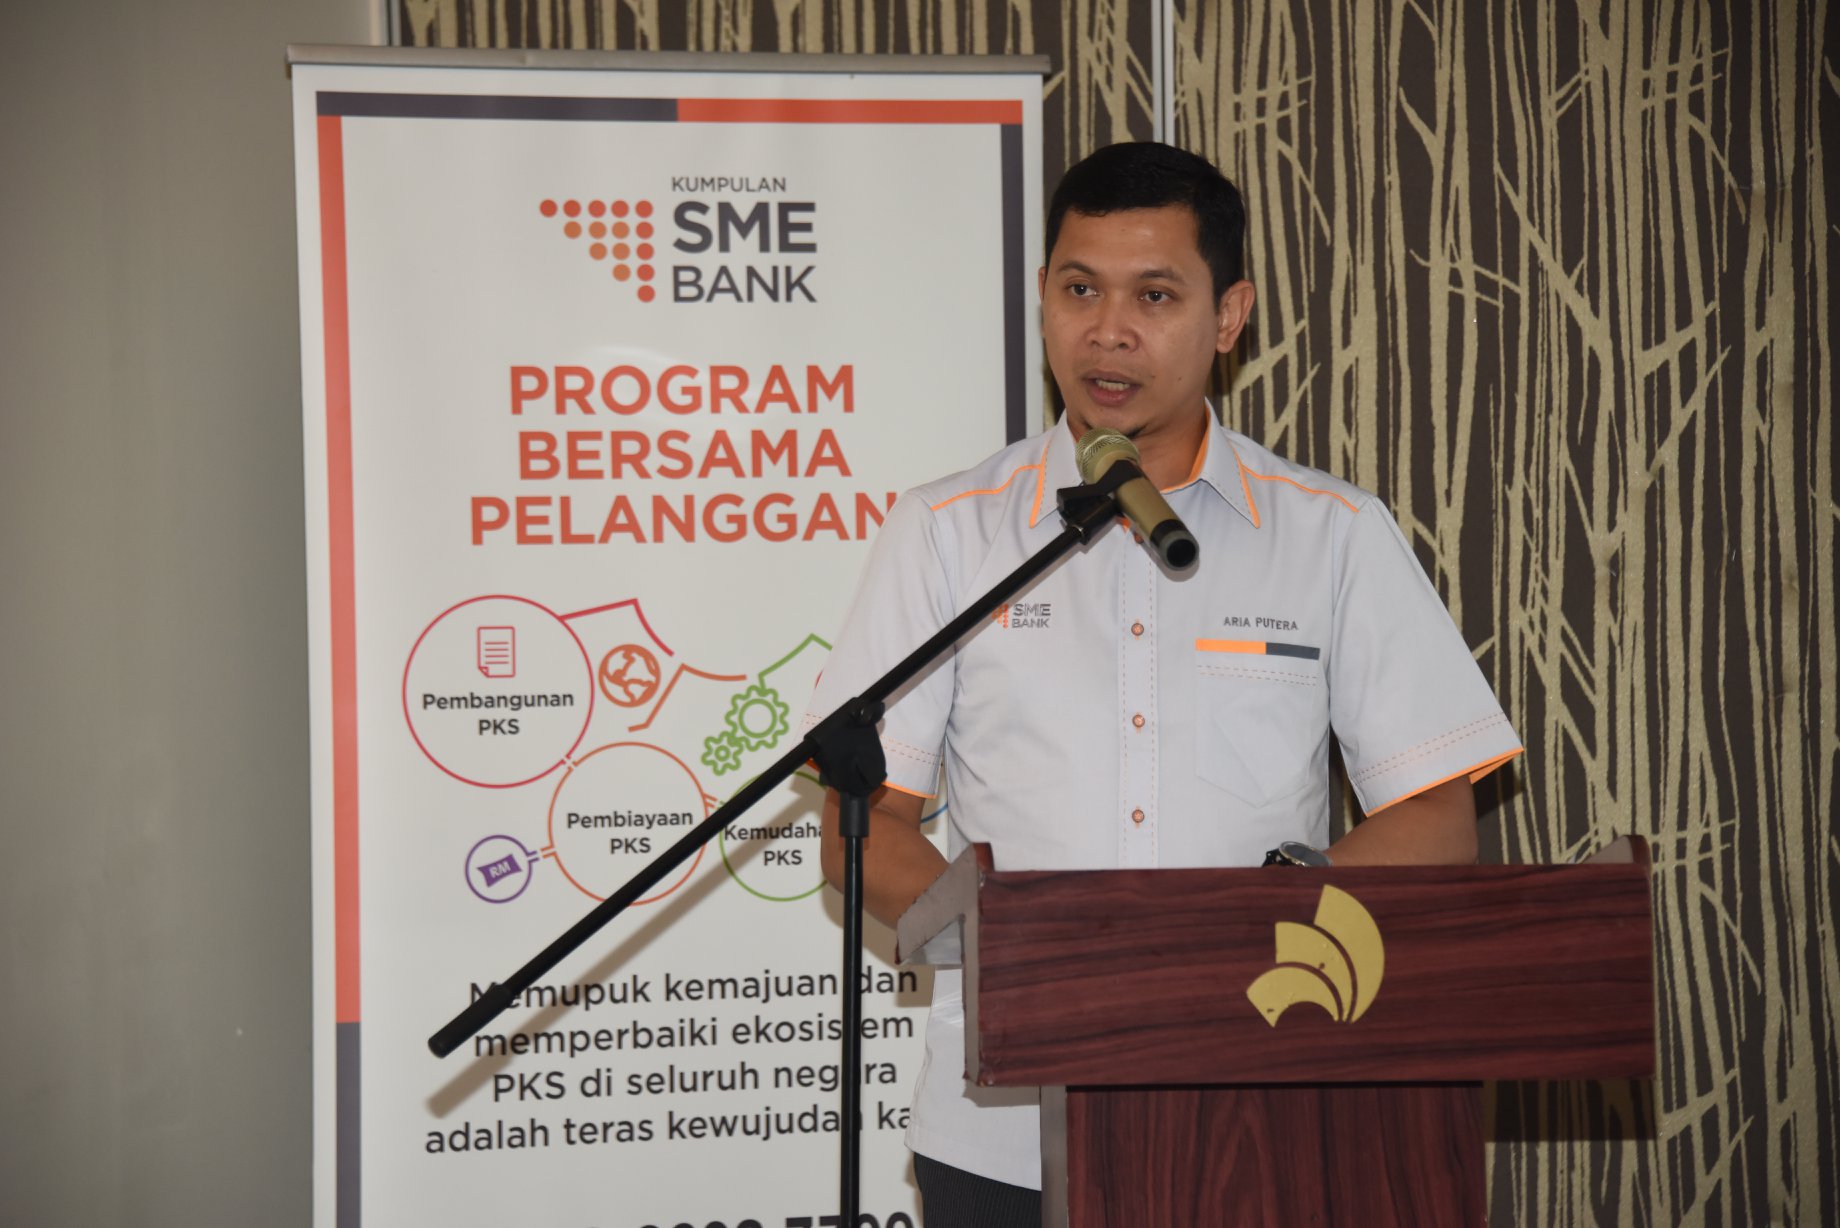 SME Bank Regional Outreach (Northern)